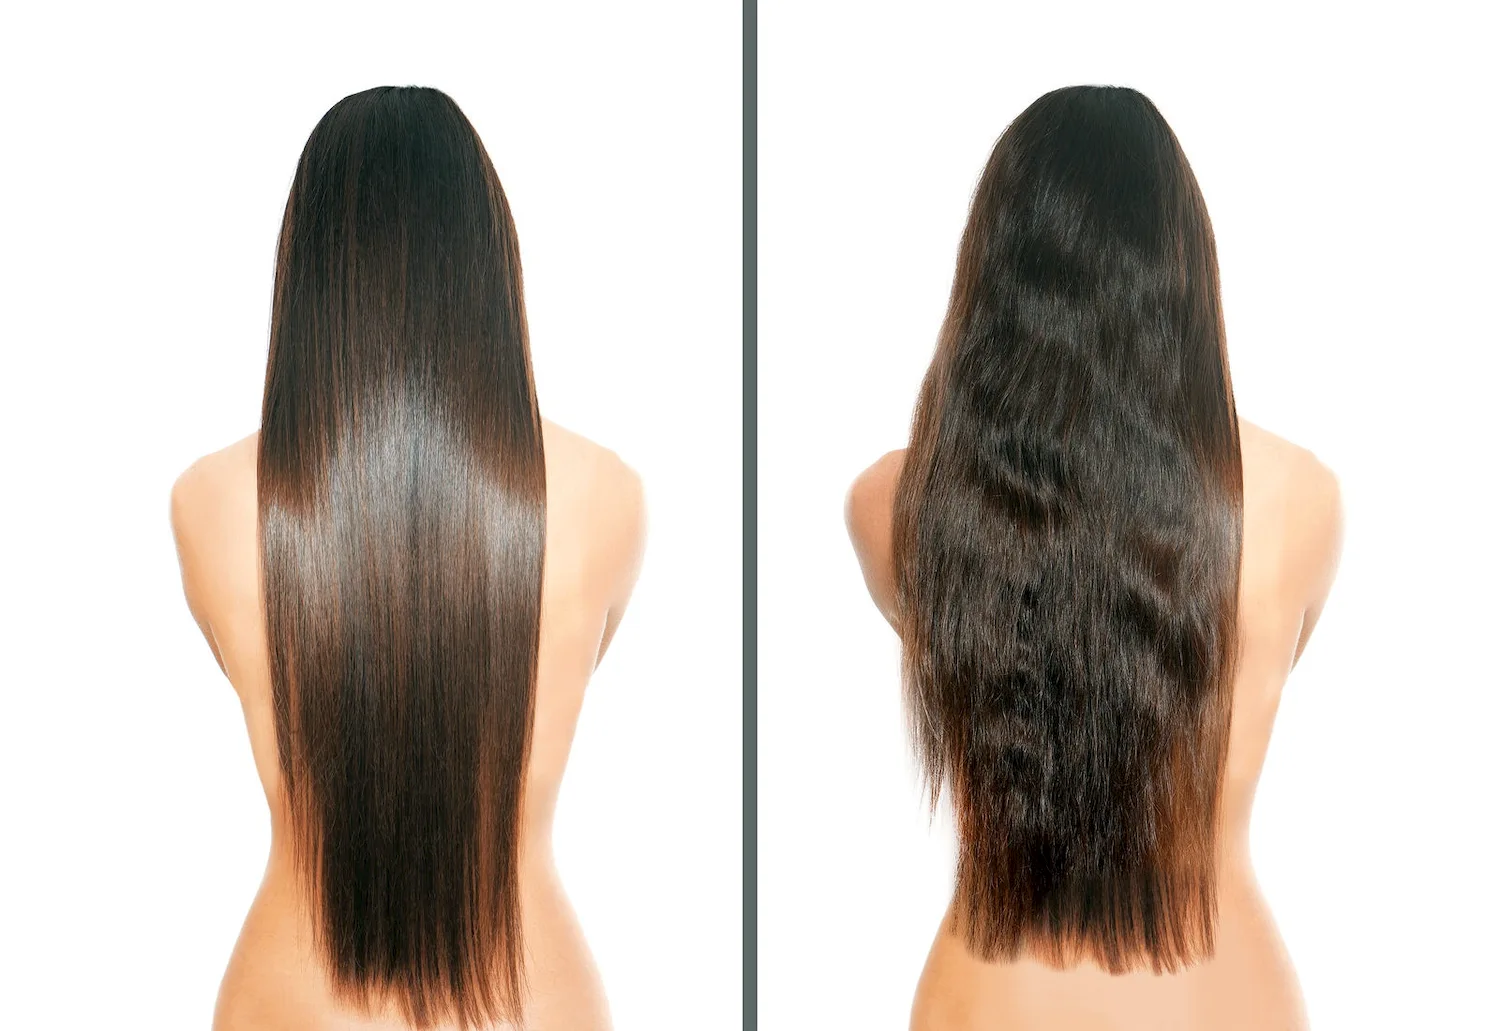 Волосы до и после на белом фоне